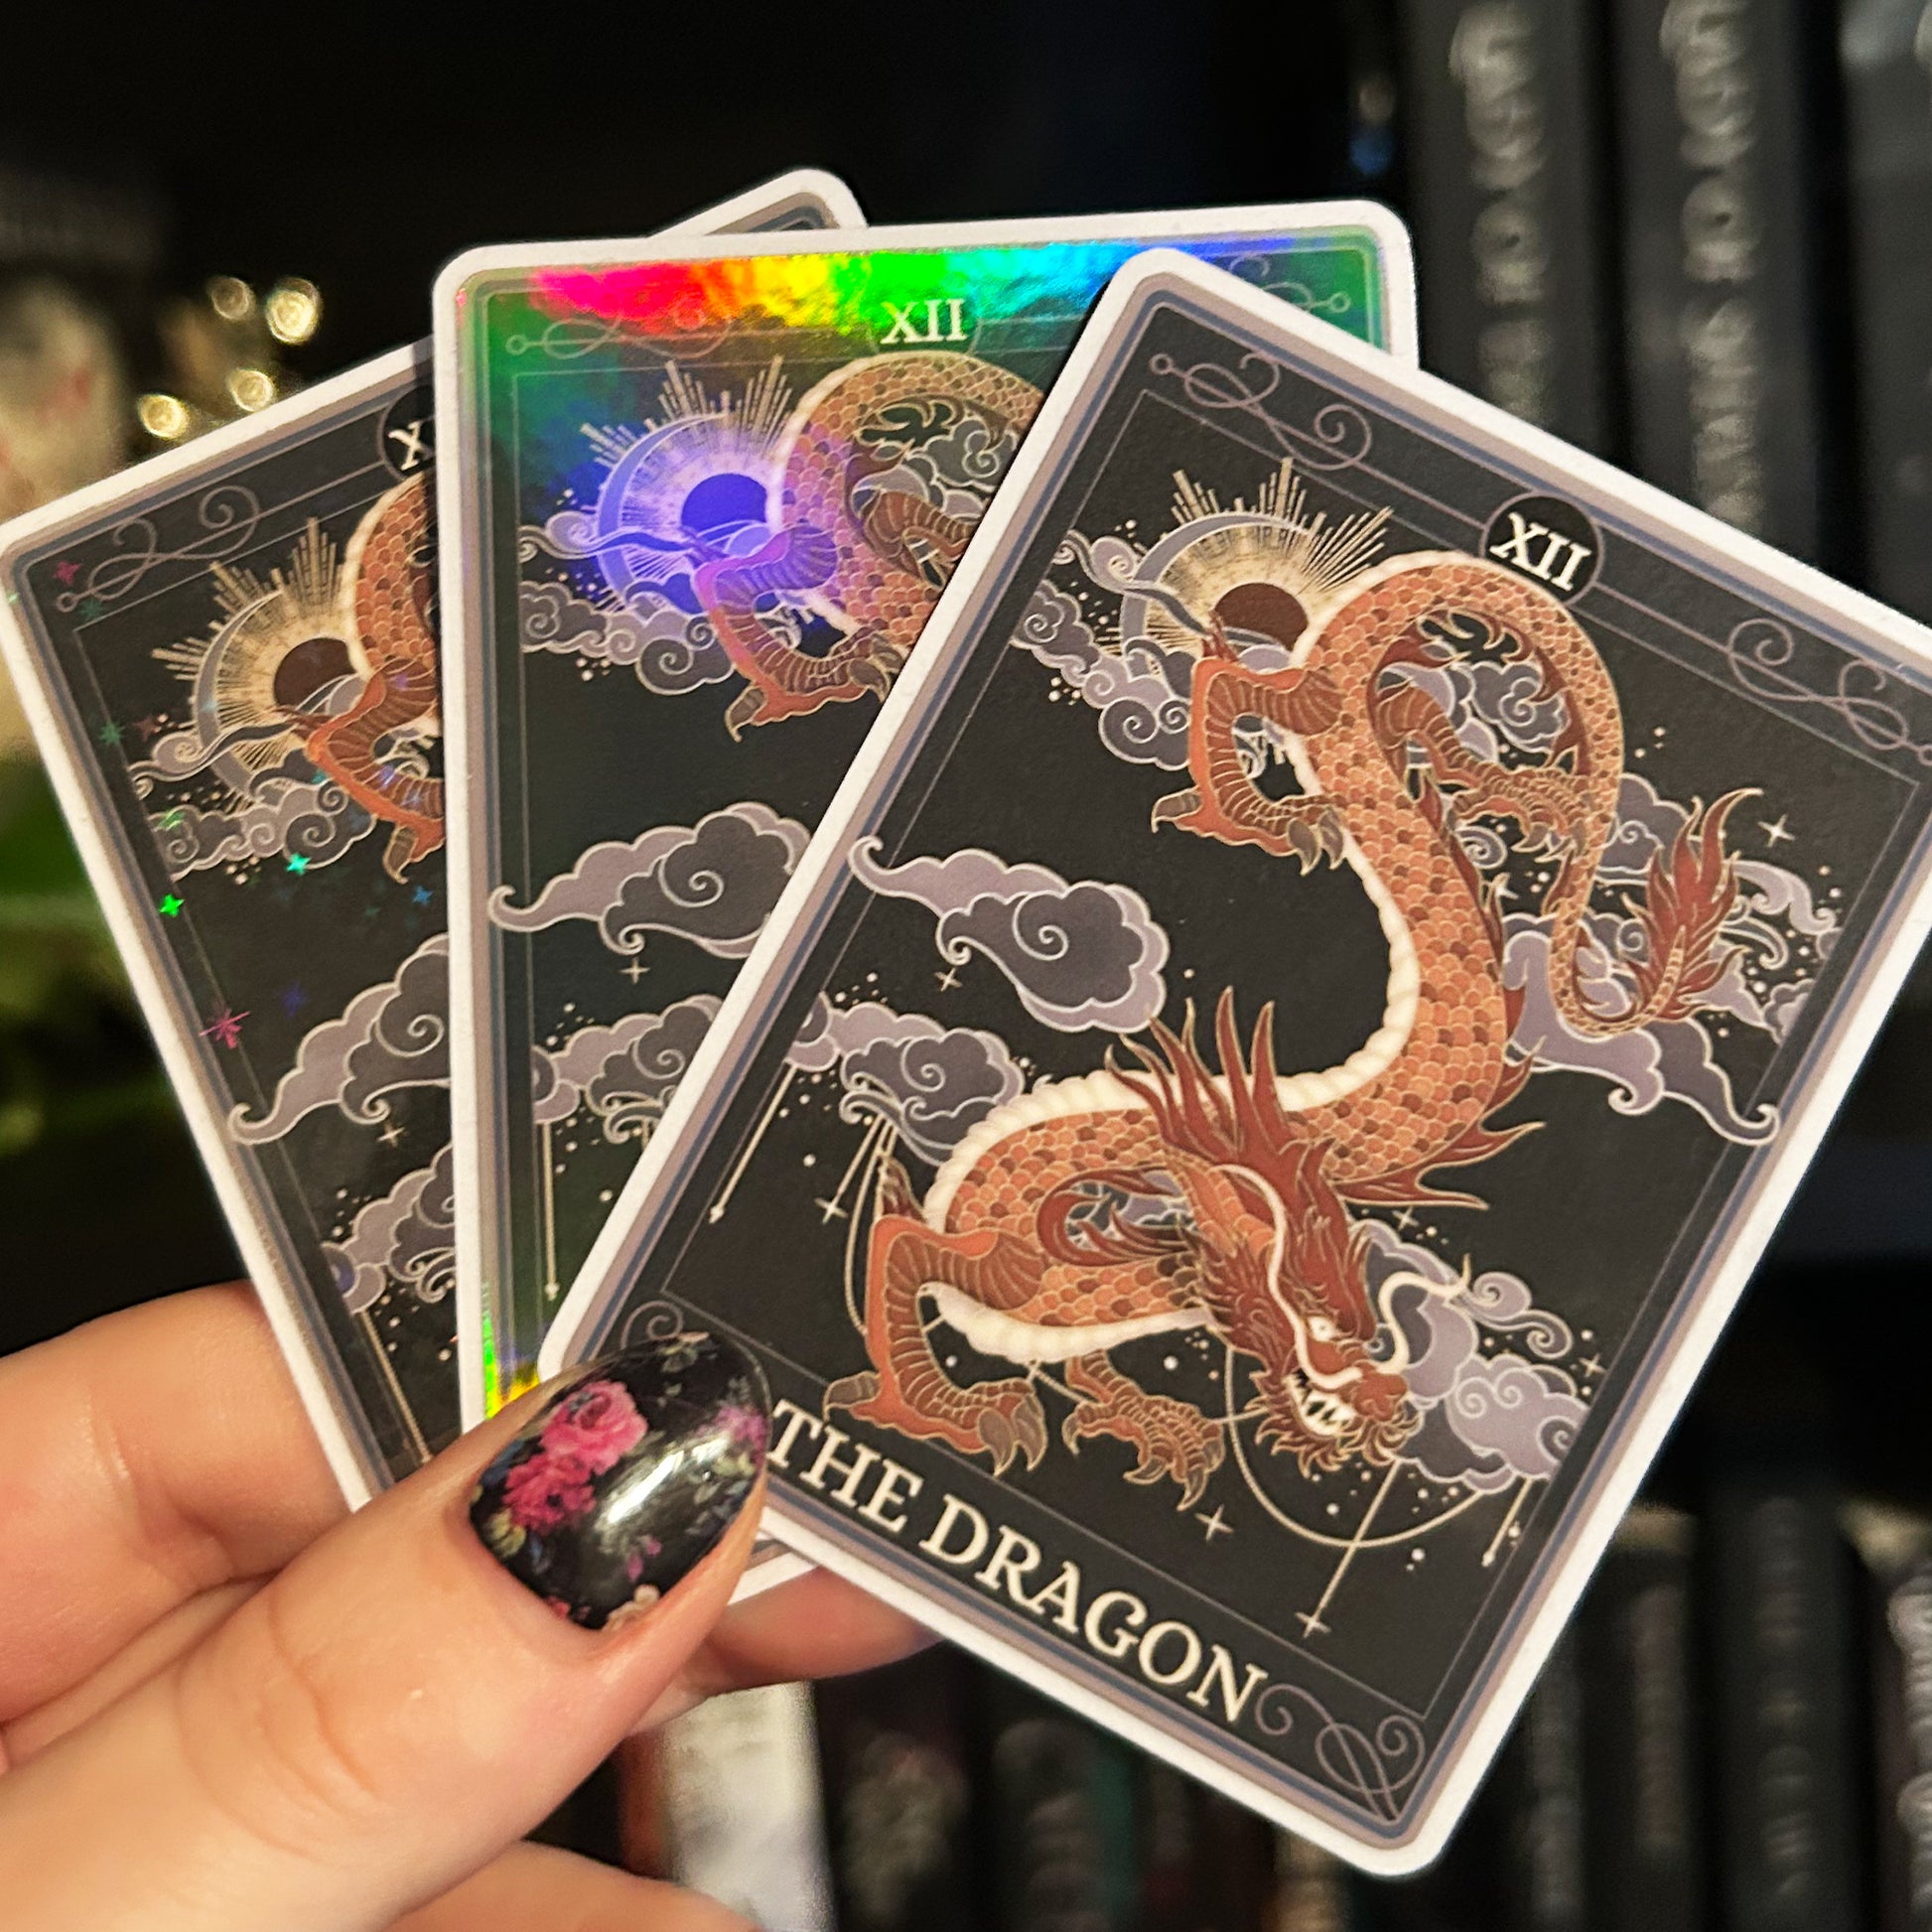 The Dragon Tarot Card Sticker - Esdee